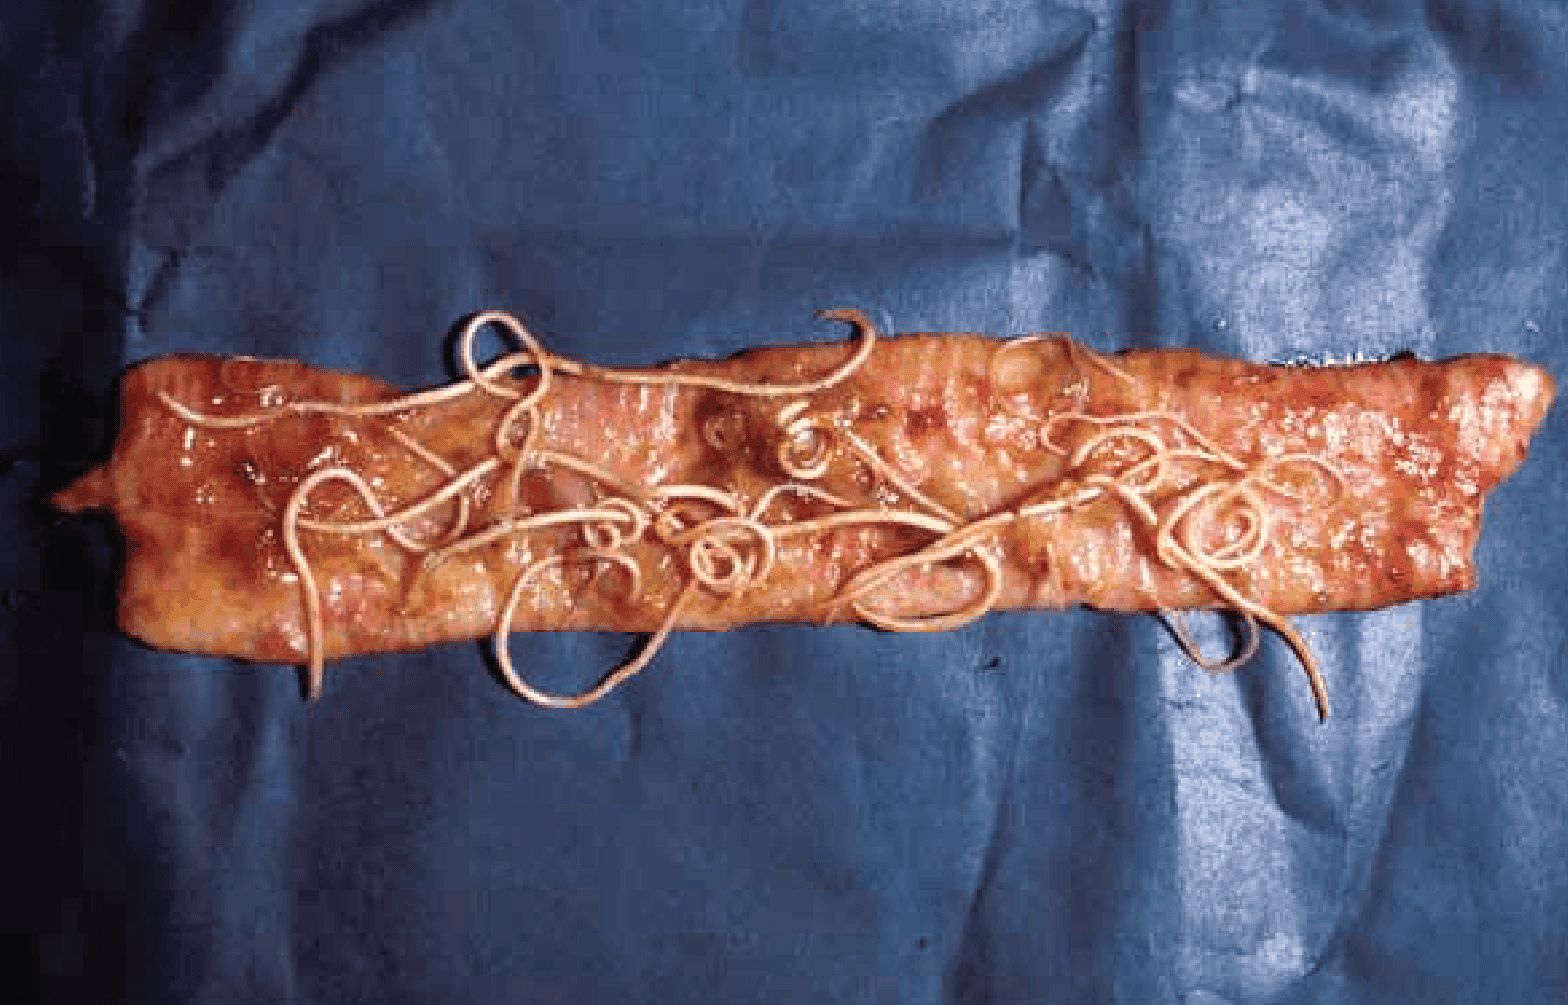 Dog Roundworm in dog gut. 
Photo courtesy of Nick Sangster, University of Sydney width=